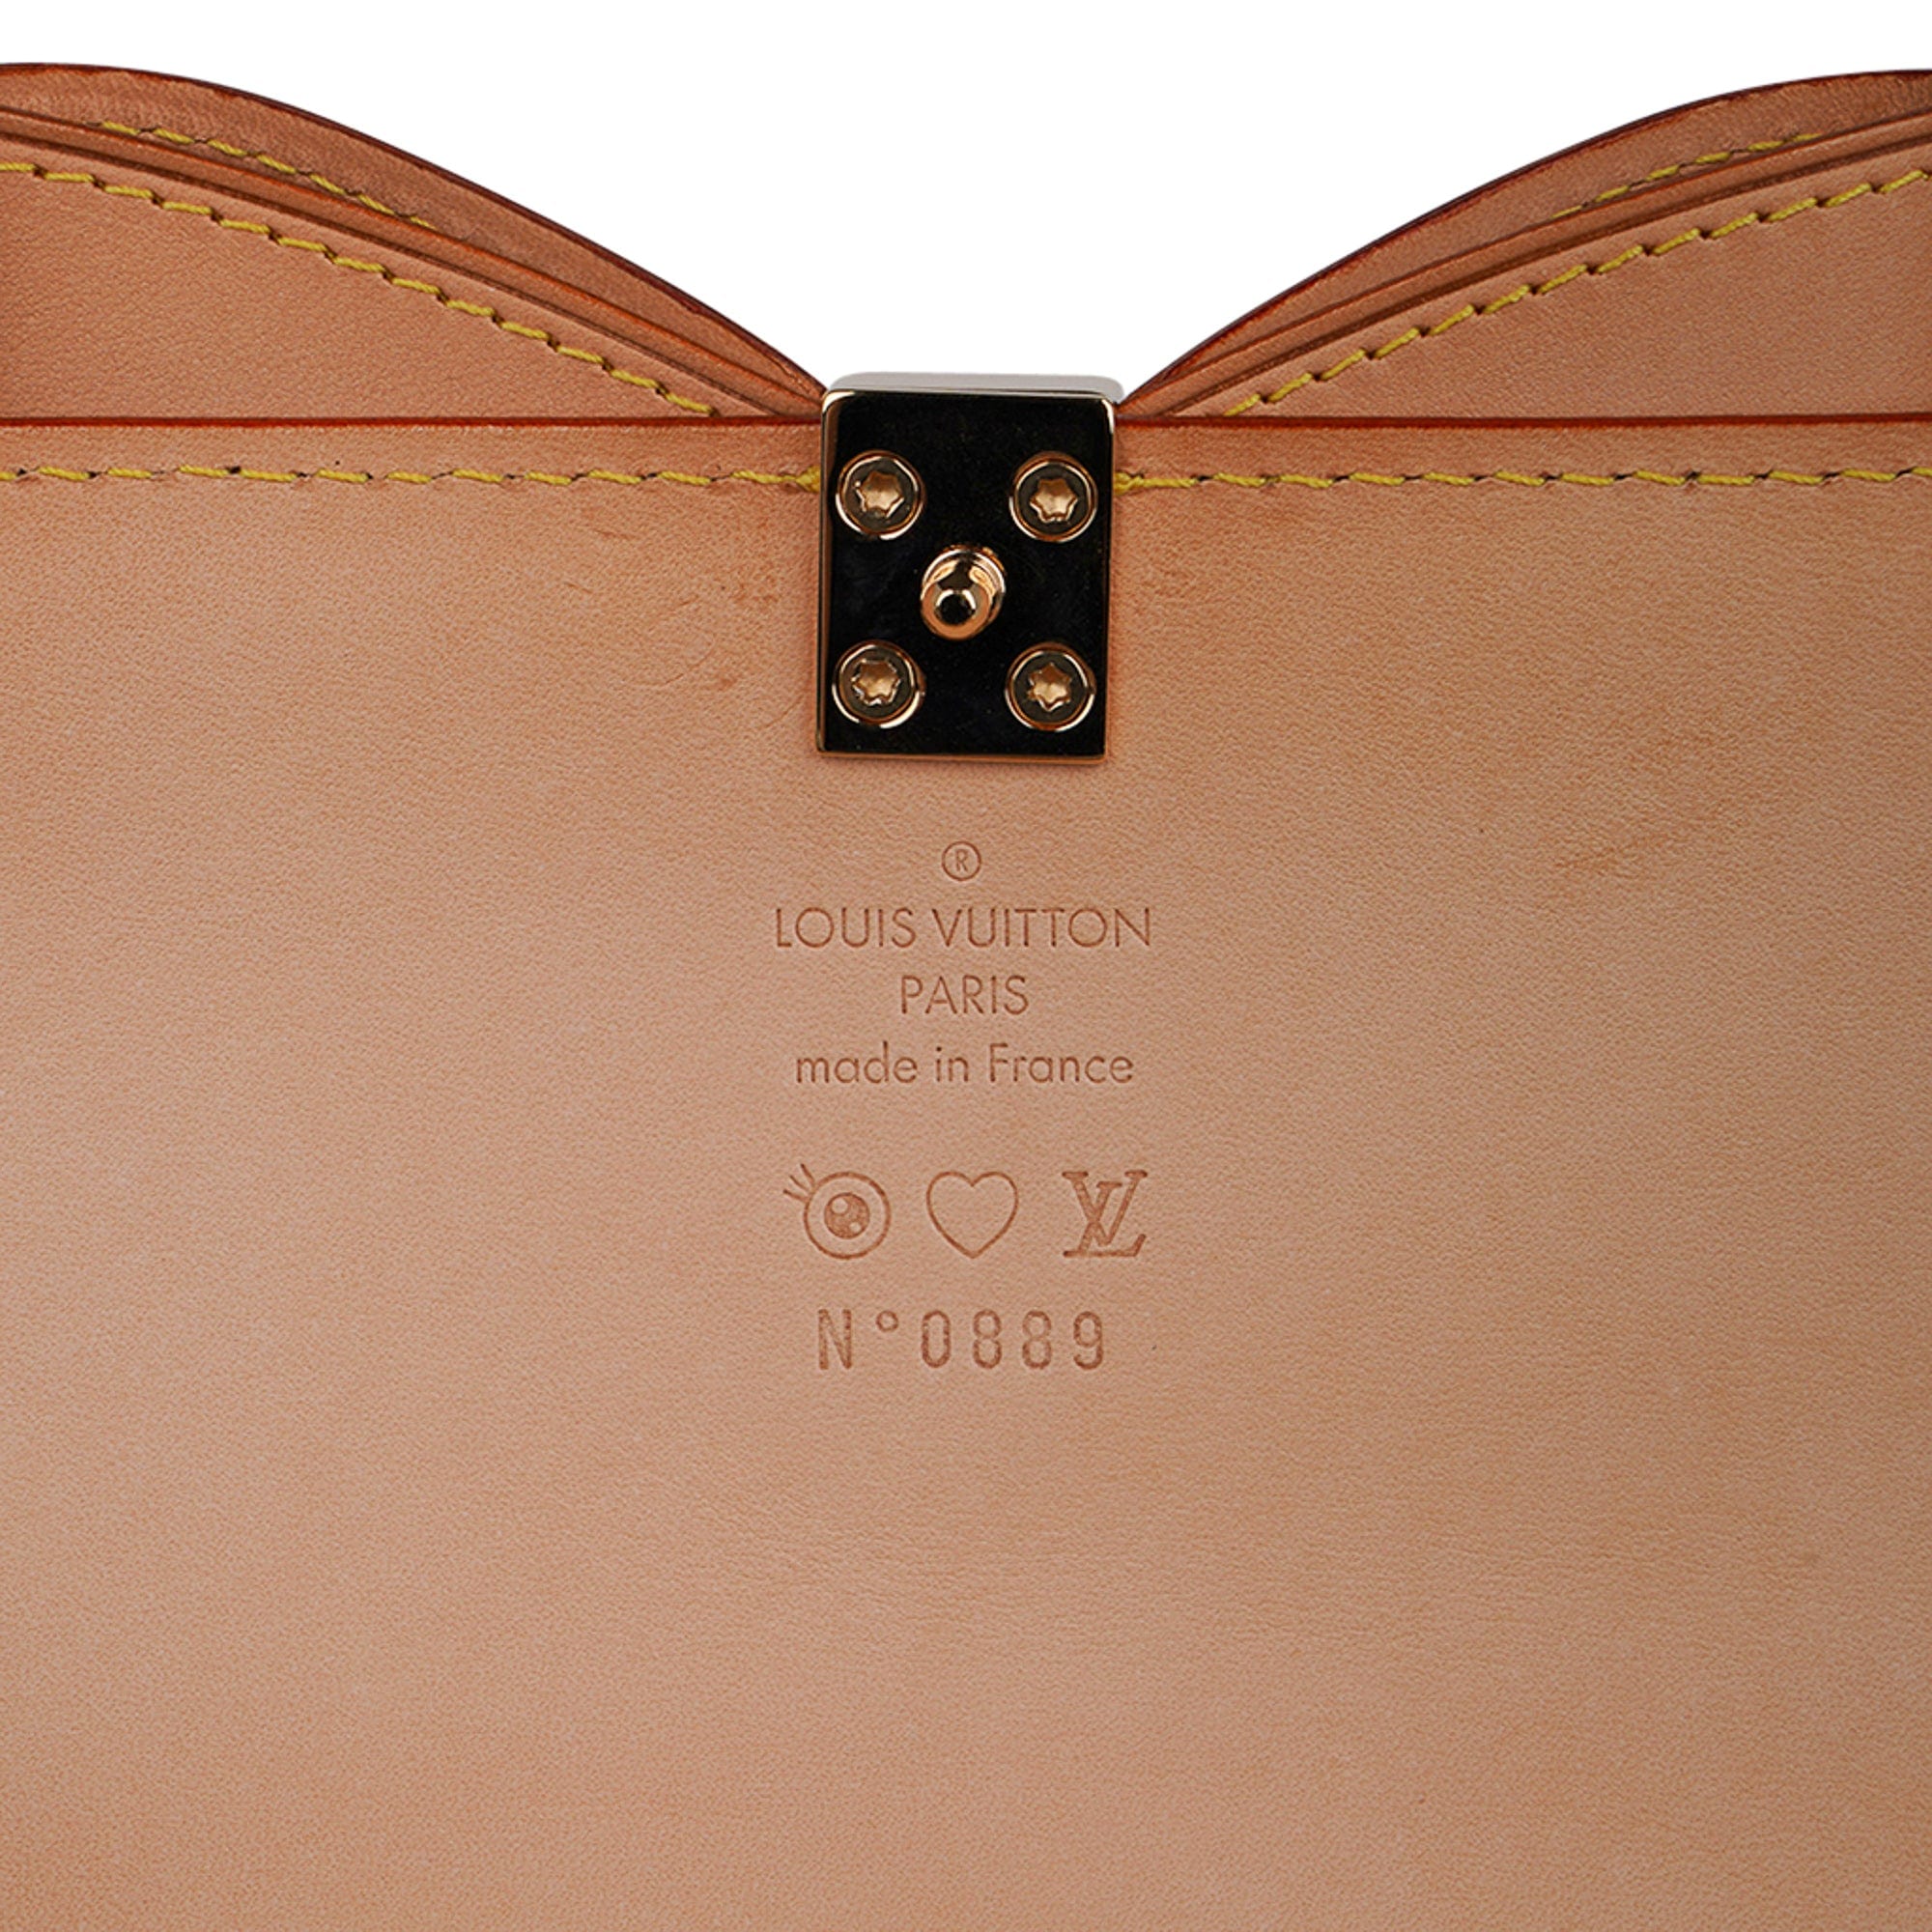 Louis Vuitton Paris x Murakami multicolor monogram bag on brown